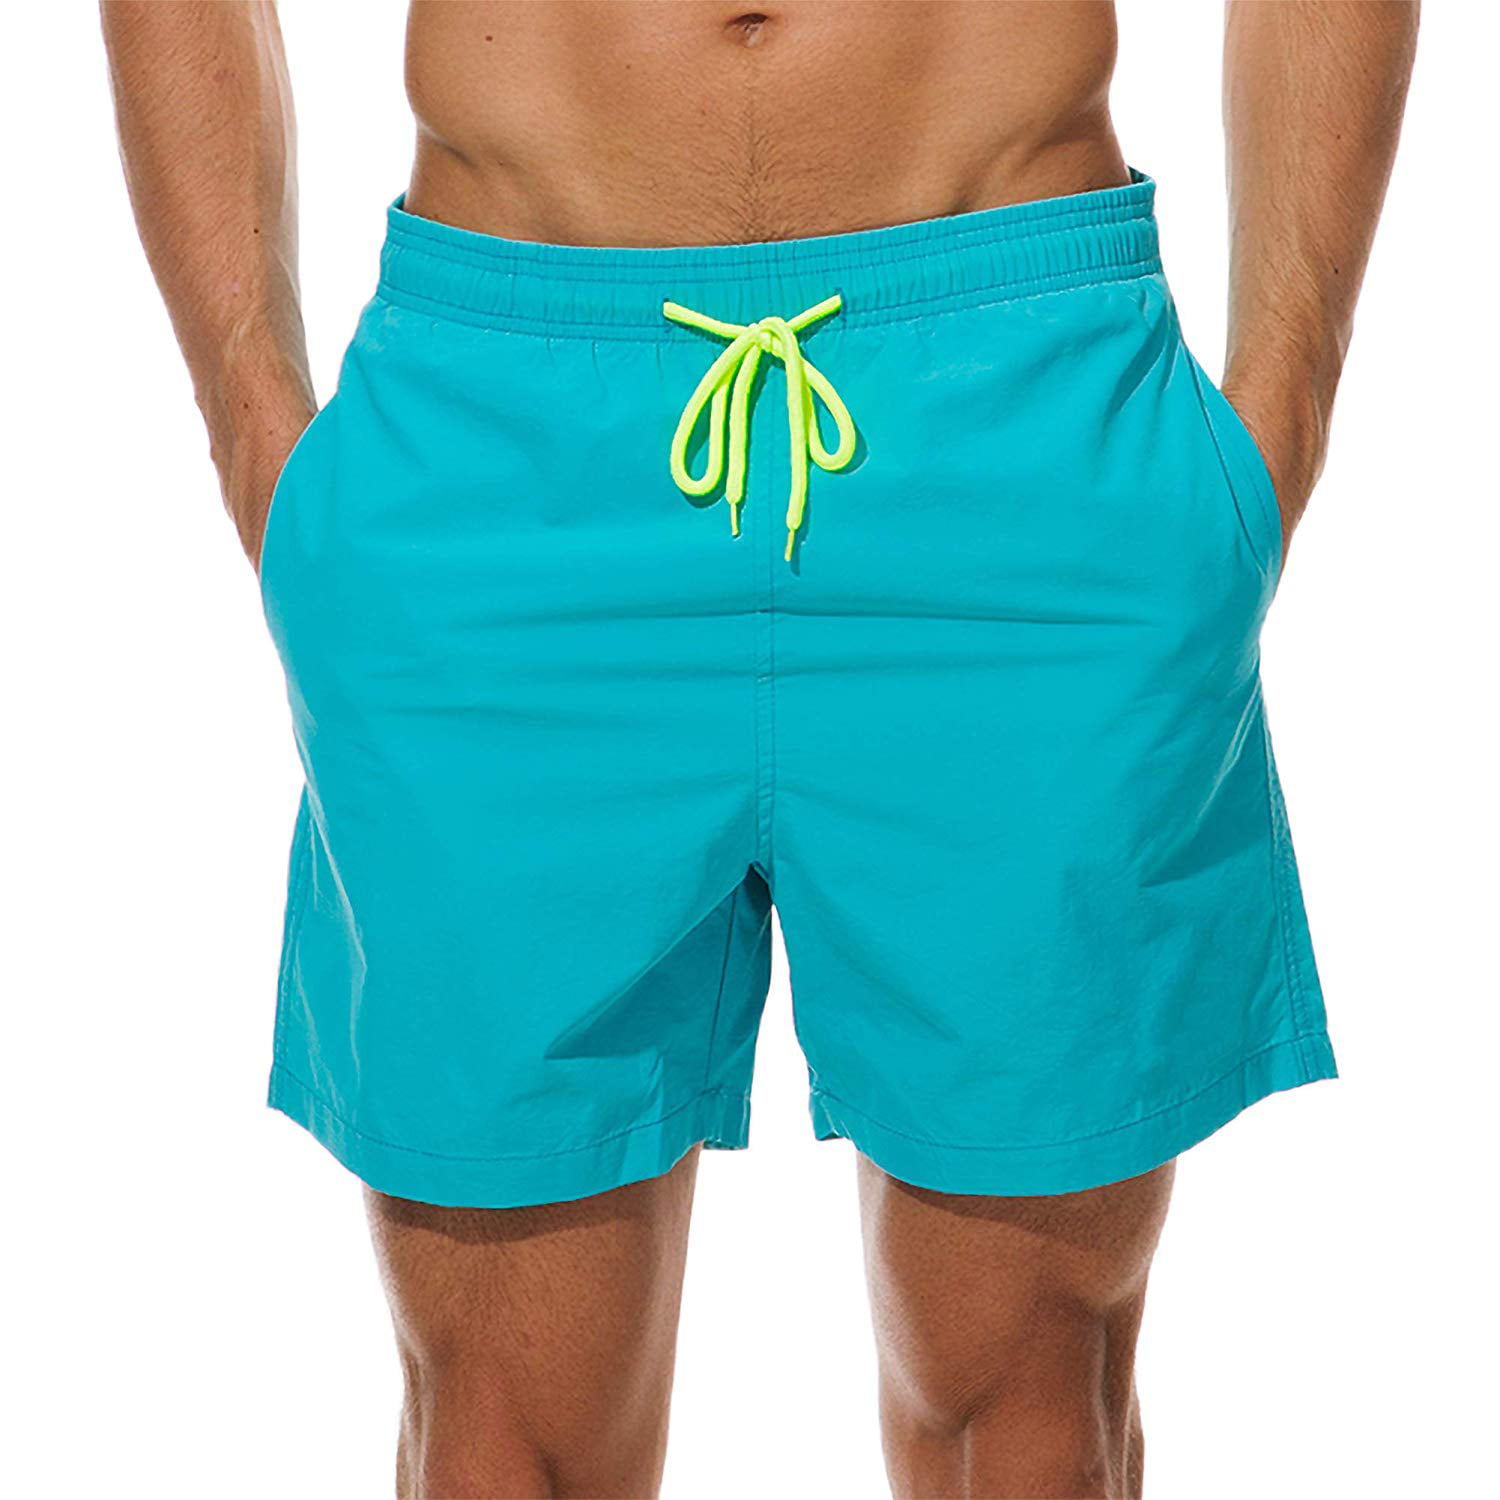 Mens Guys Swimming Trunks Surfing Mesh Beach Board Shorts Novelty Pants Poster